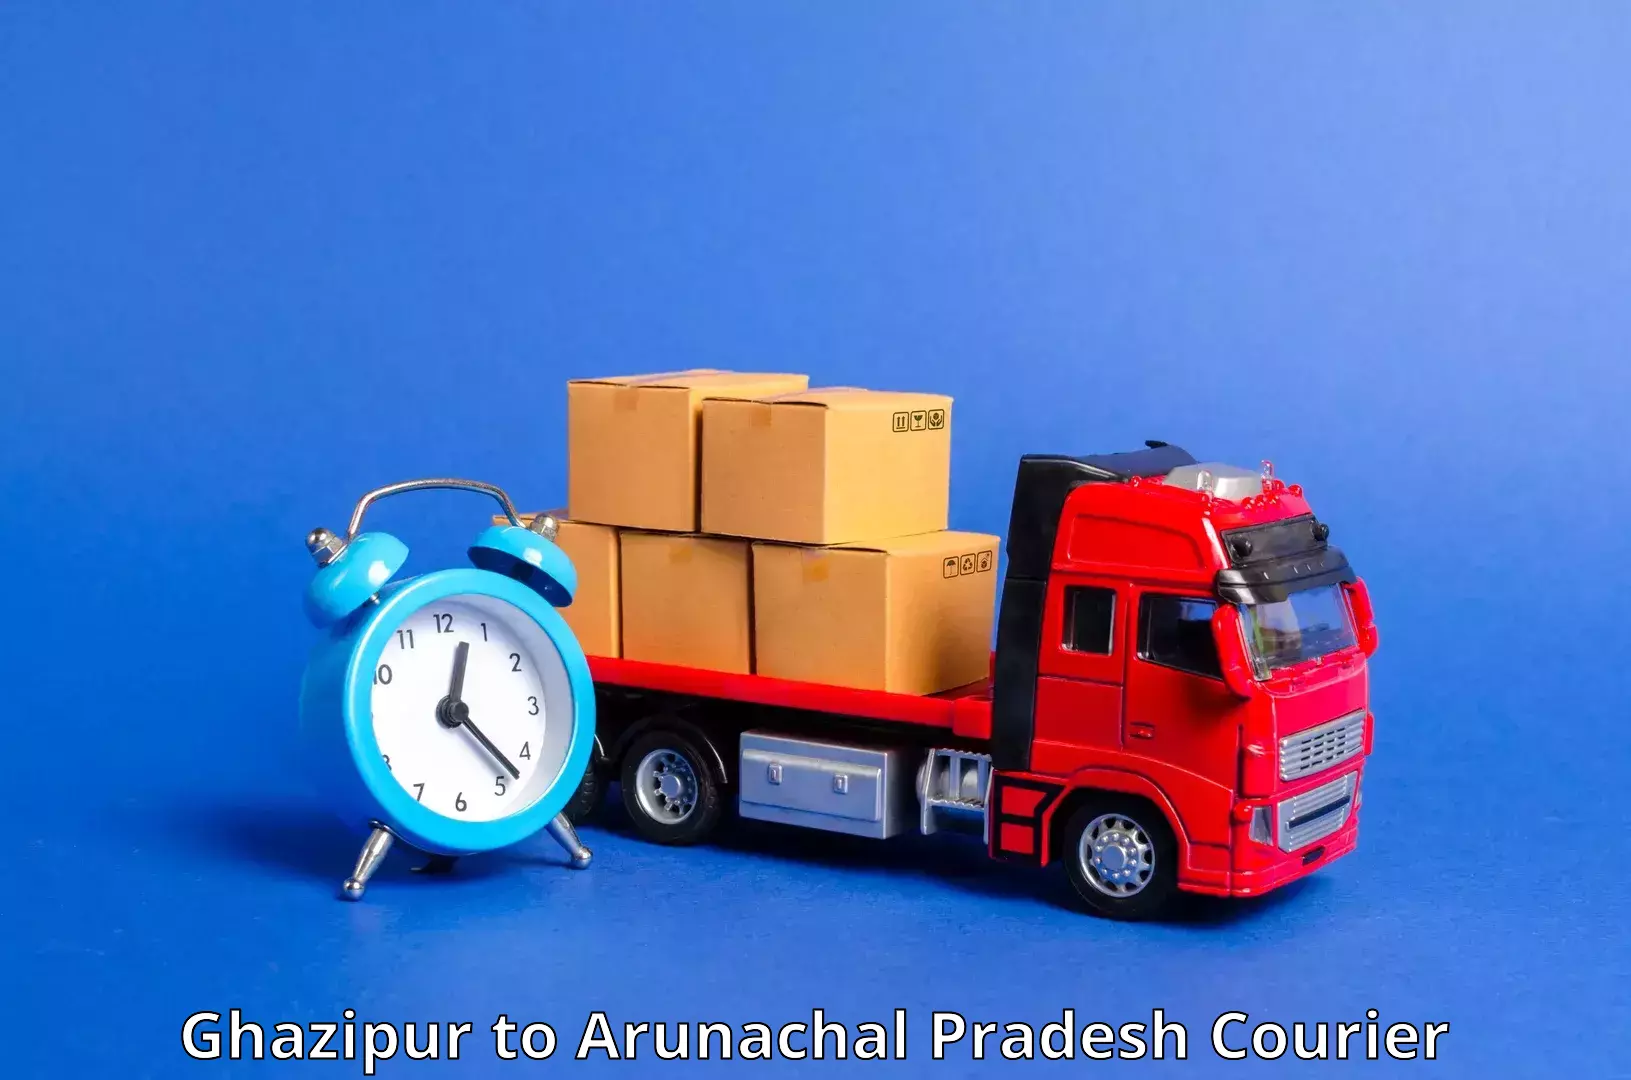 Tech-enabled shipping Ghazipur to Lower Subansiri